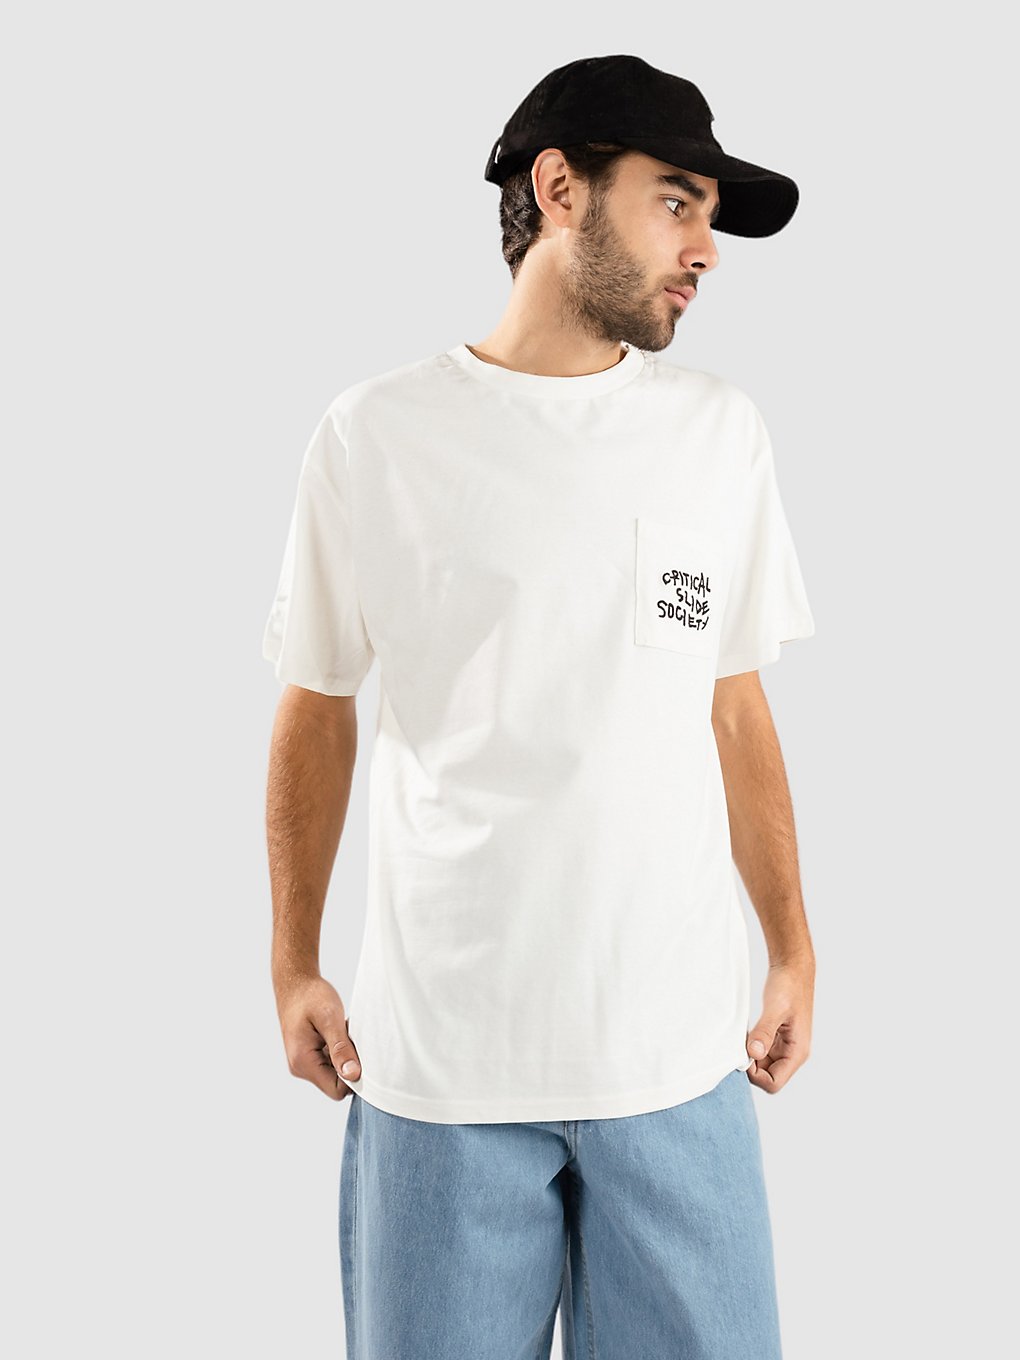 TCSS Triplet T-Shirt vintage white kaufen